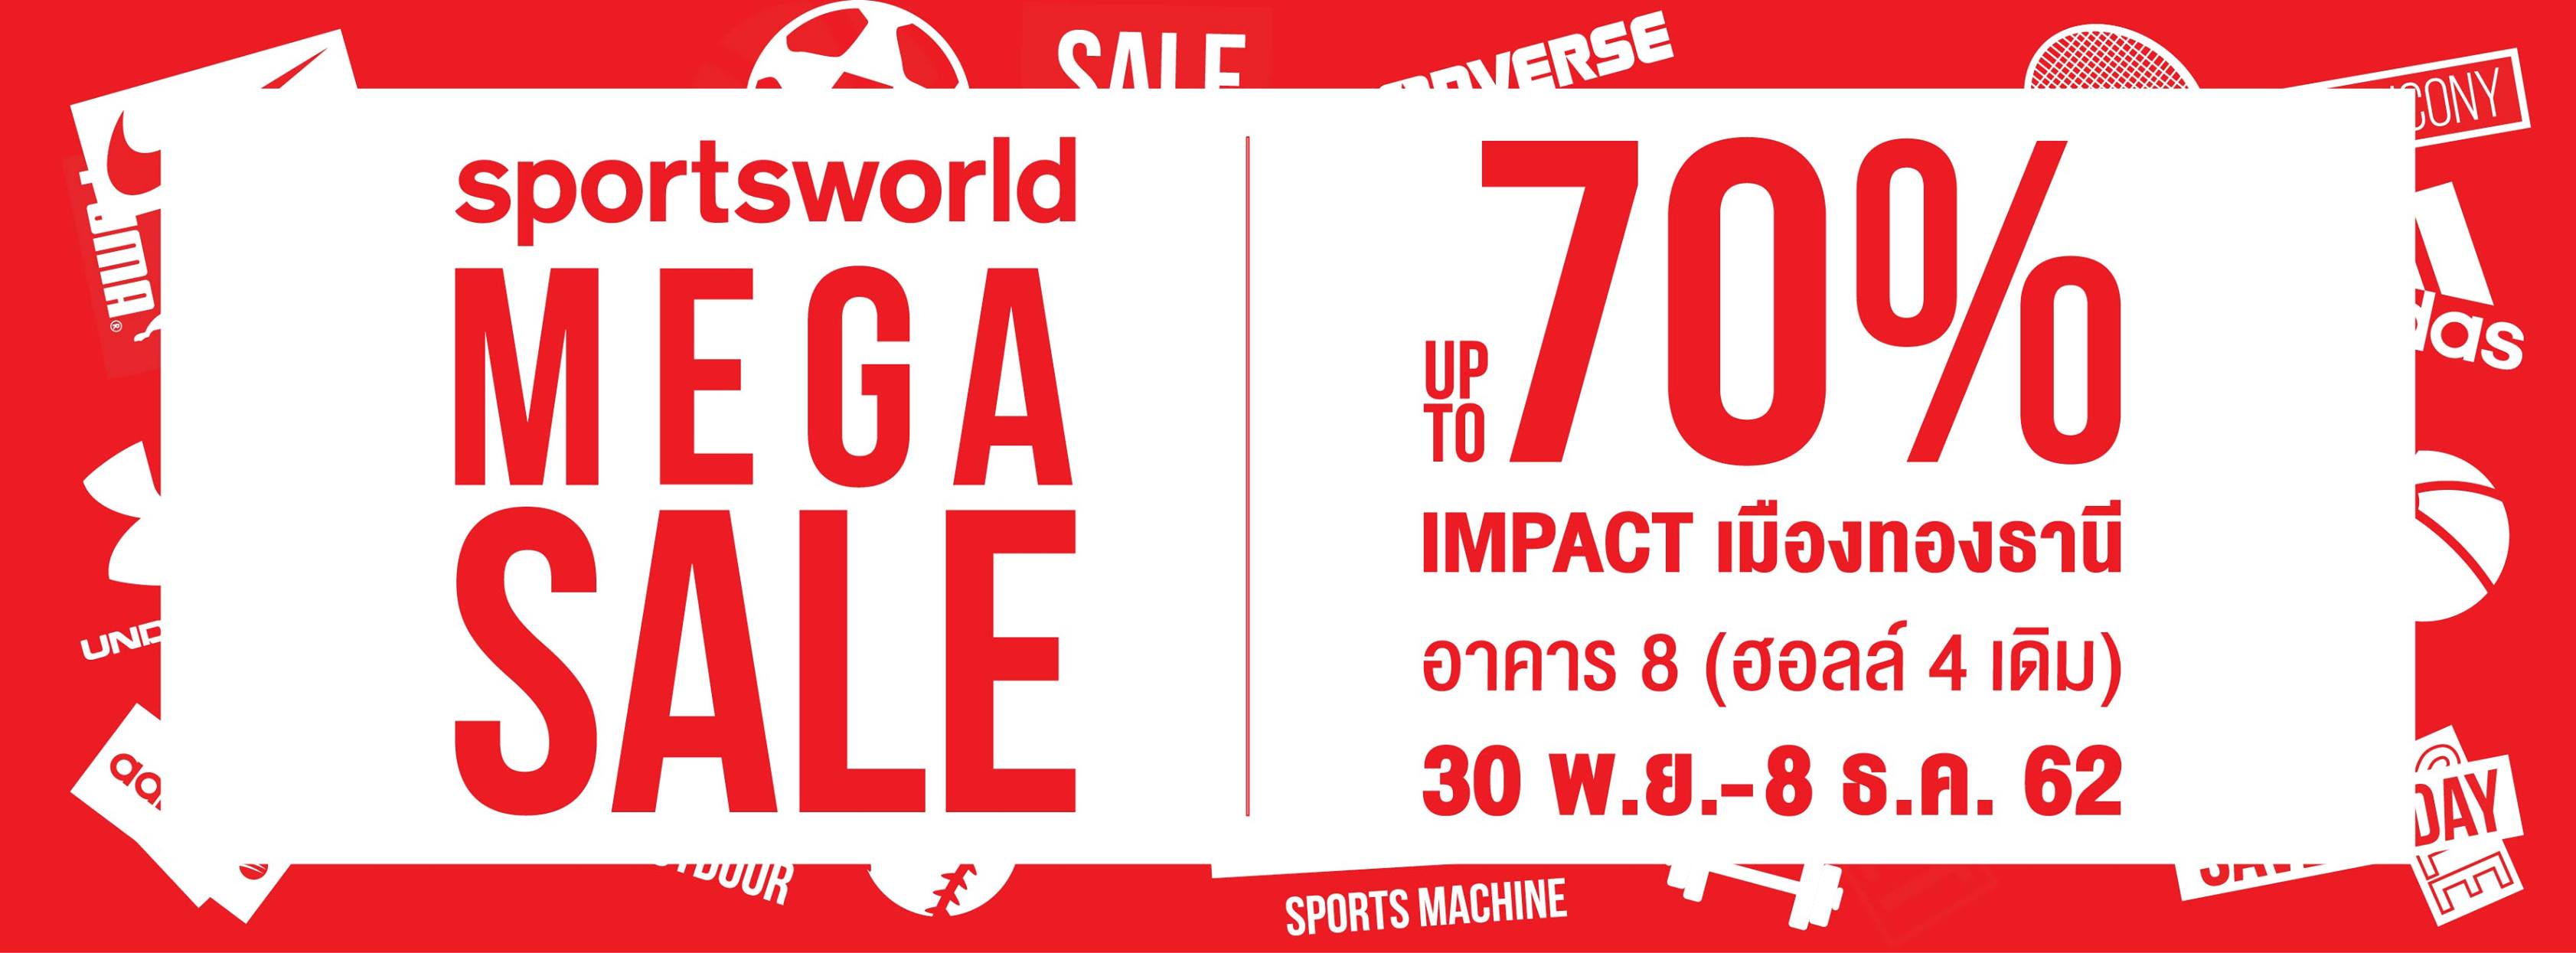 Sportsworld Mega Sale